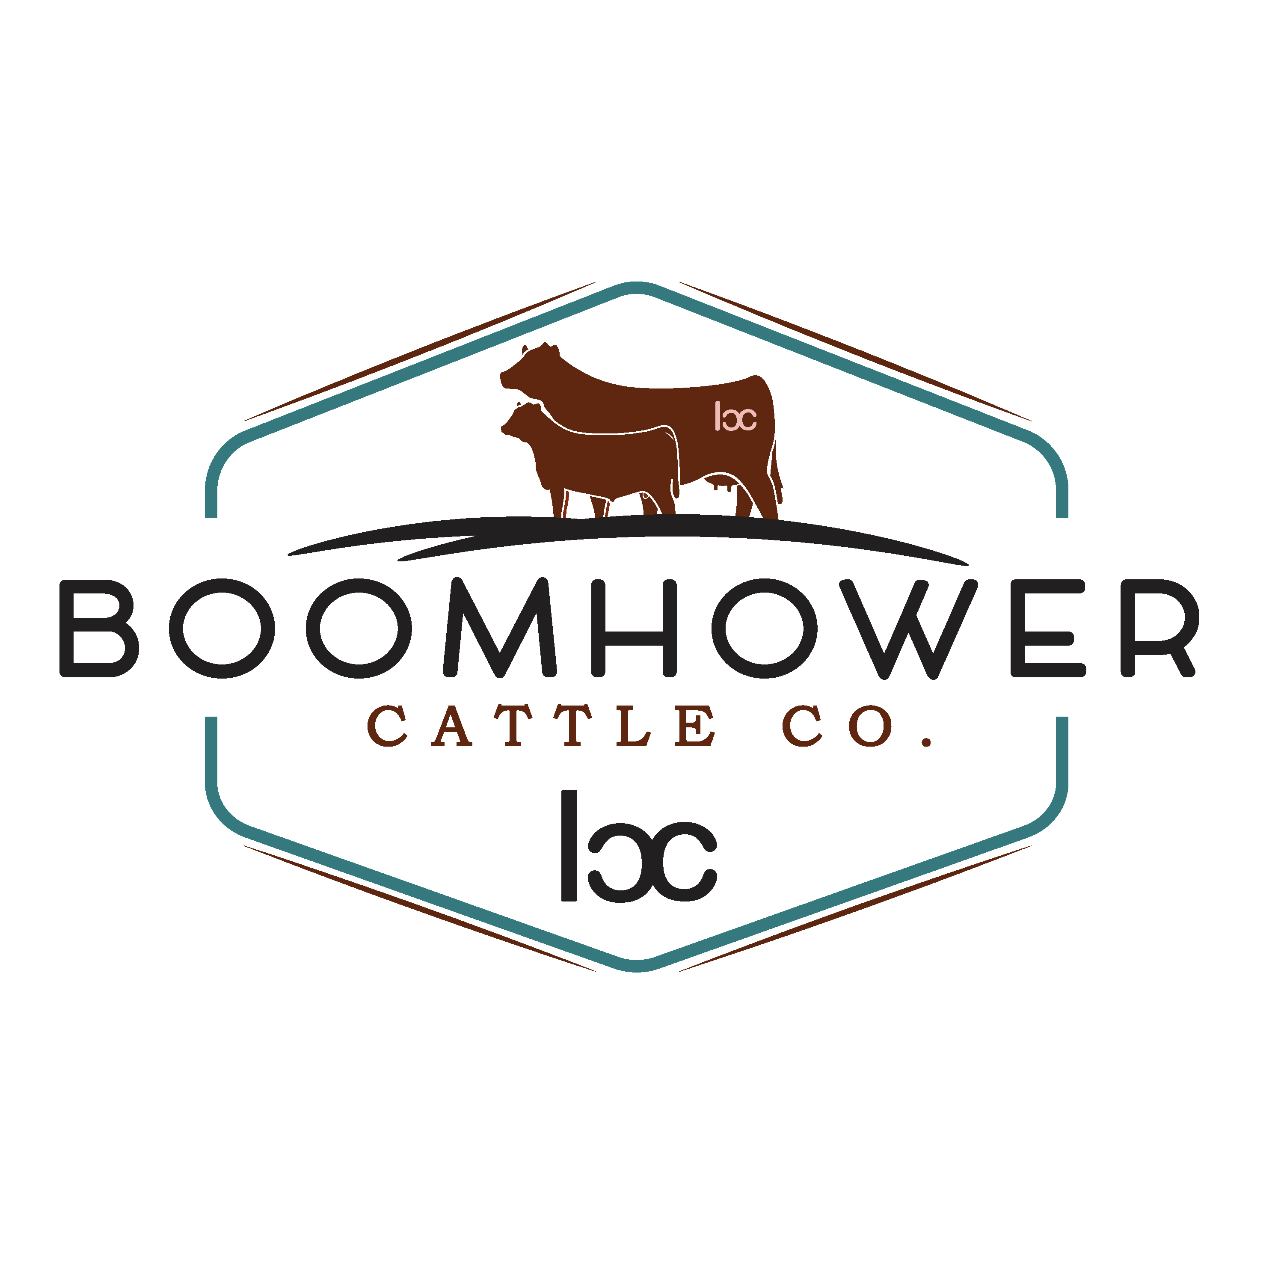 Image of Boomhower logo